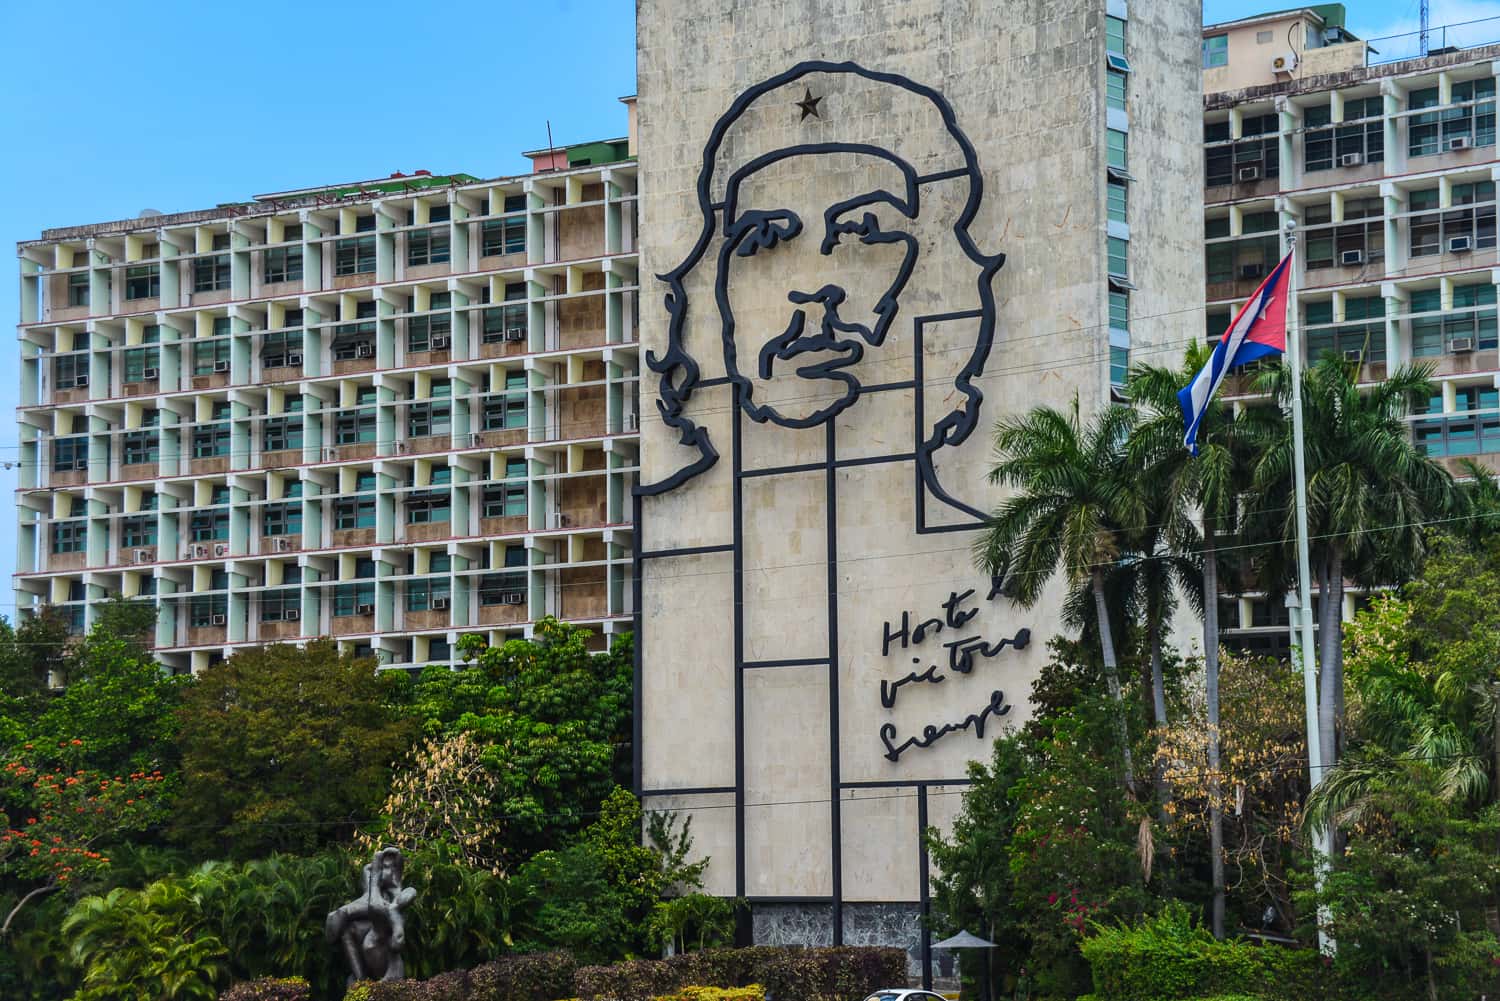 Che Guevara, national hero!